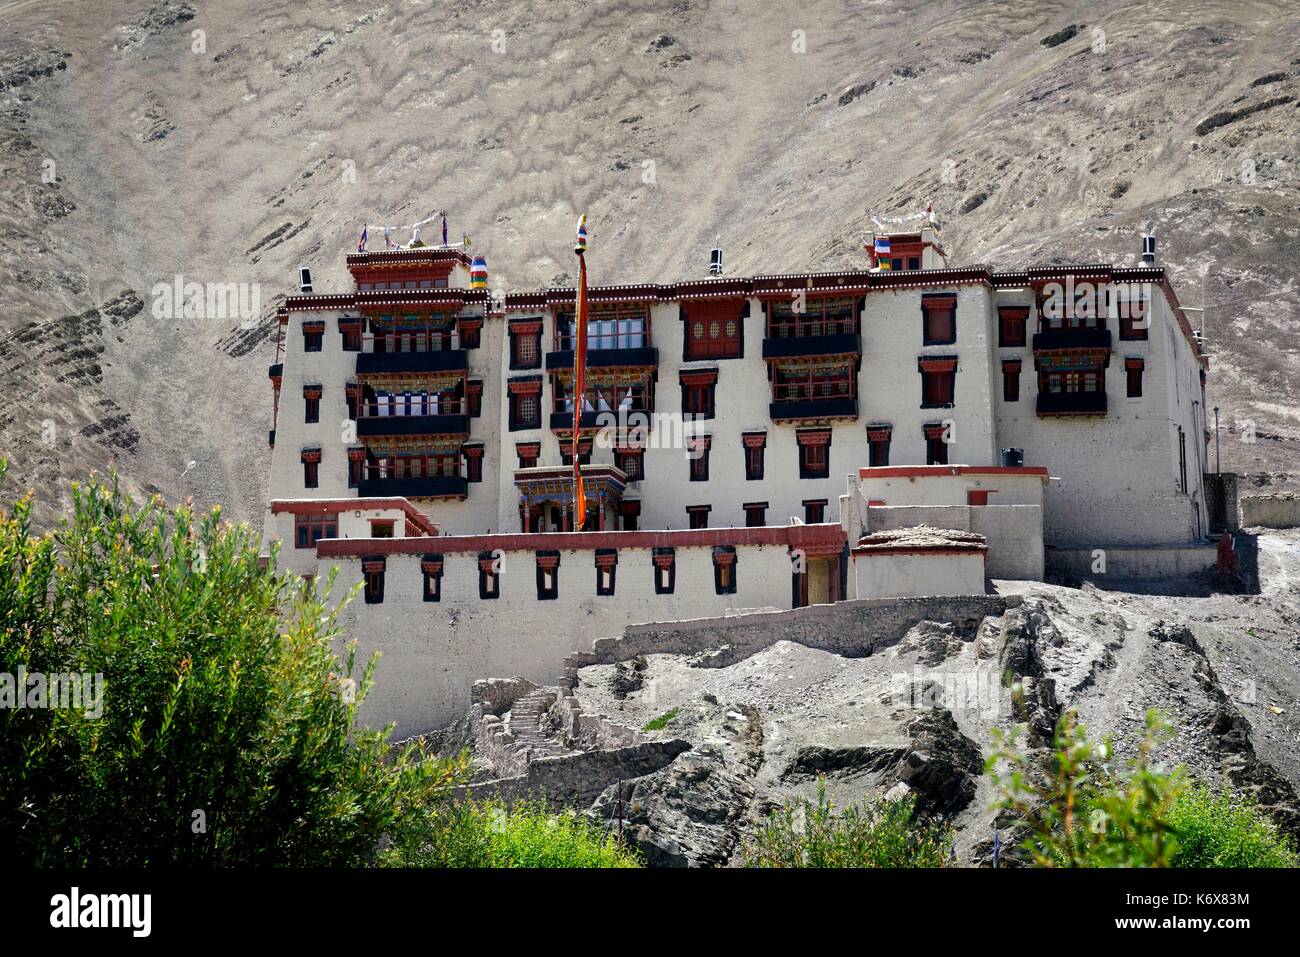 India, dello Stato del Jammu e Kashmir, Himalaya, Ladakh, Indus Valle, Stok palace Foto Stock